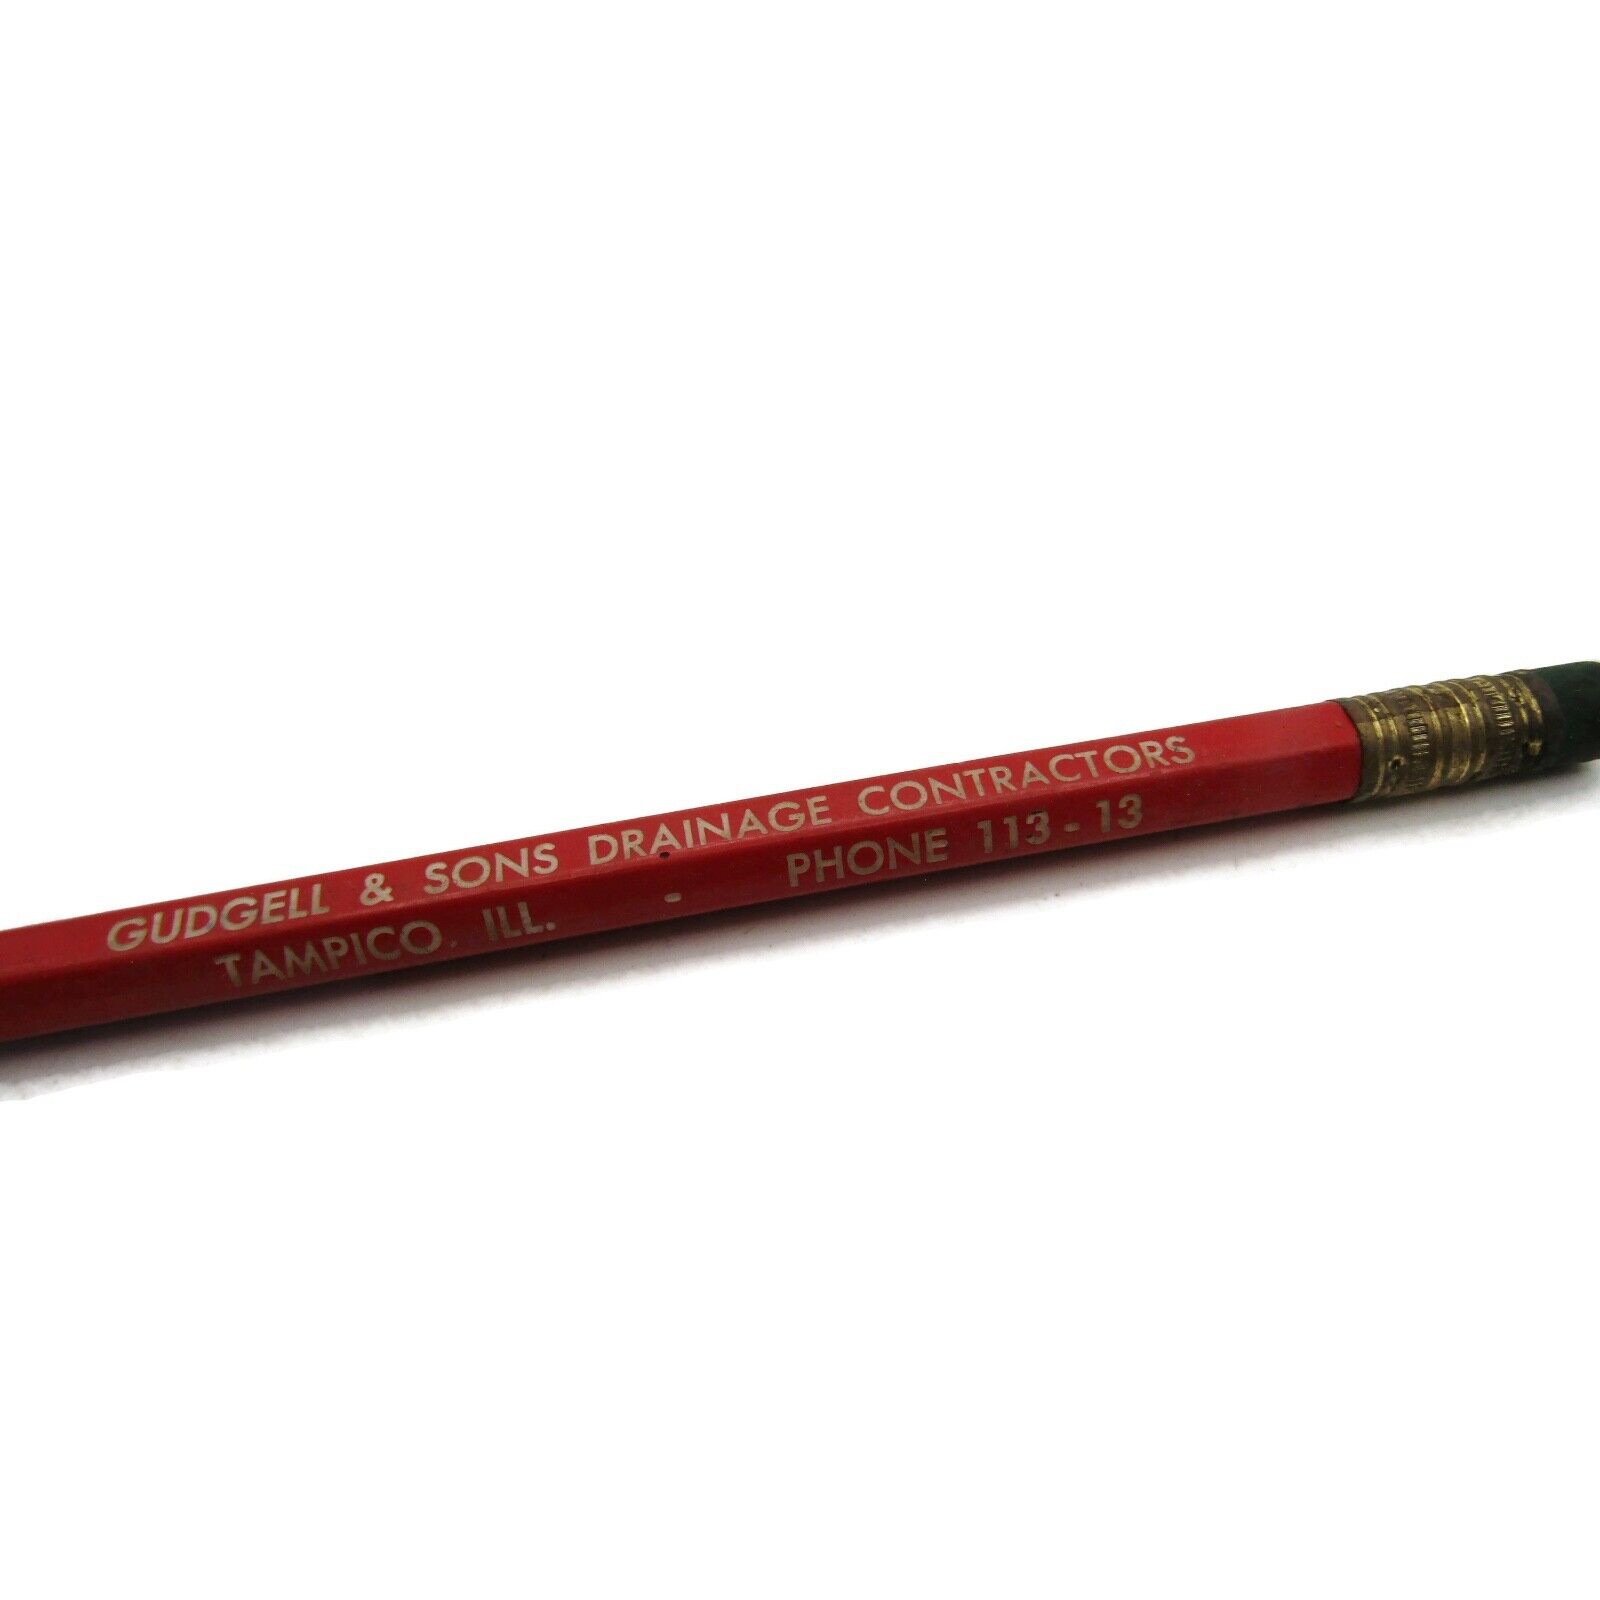 Tampico Illinois Gudgell & Sons Drainage Contractors Advertising Pencil Vintage